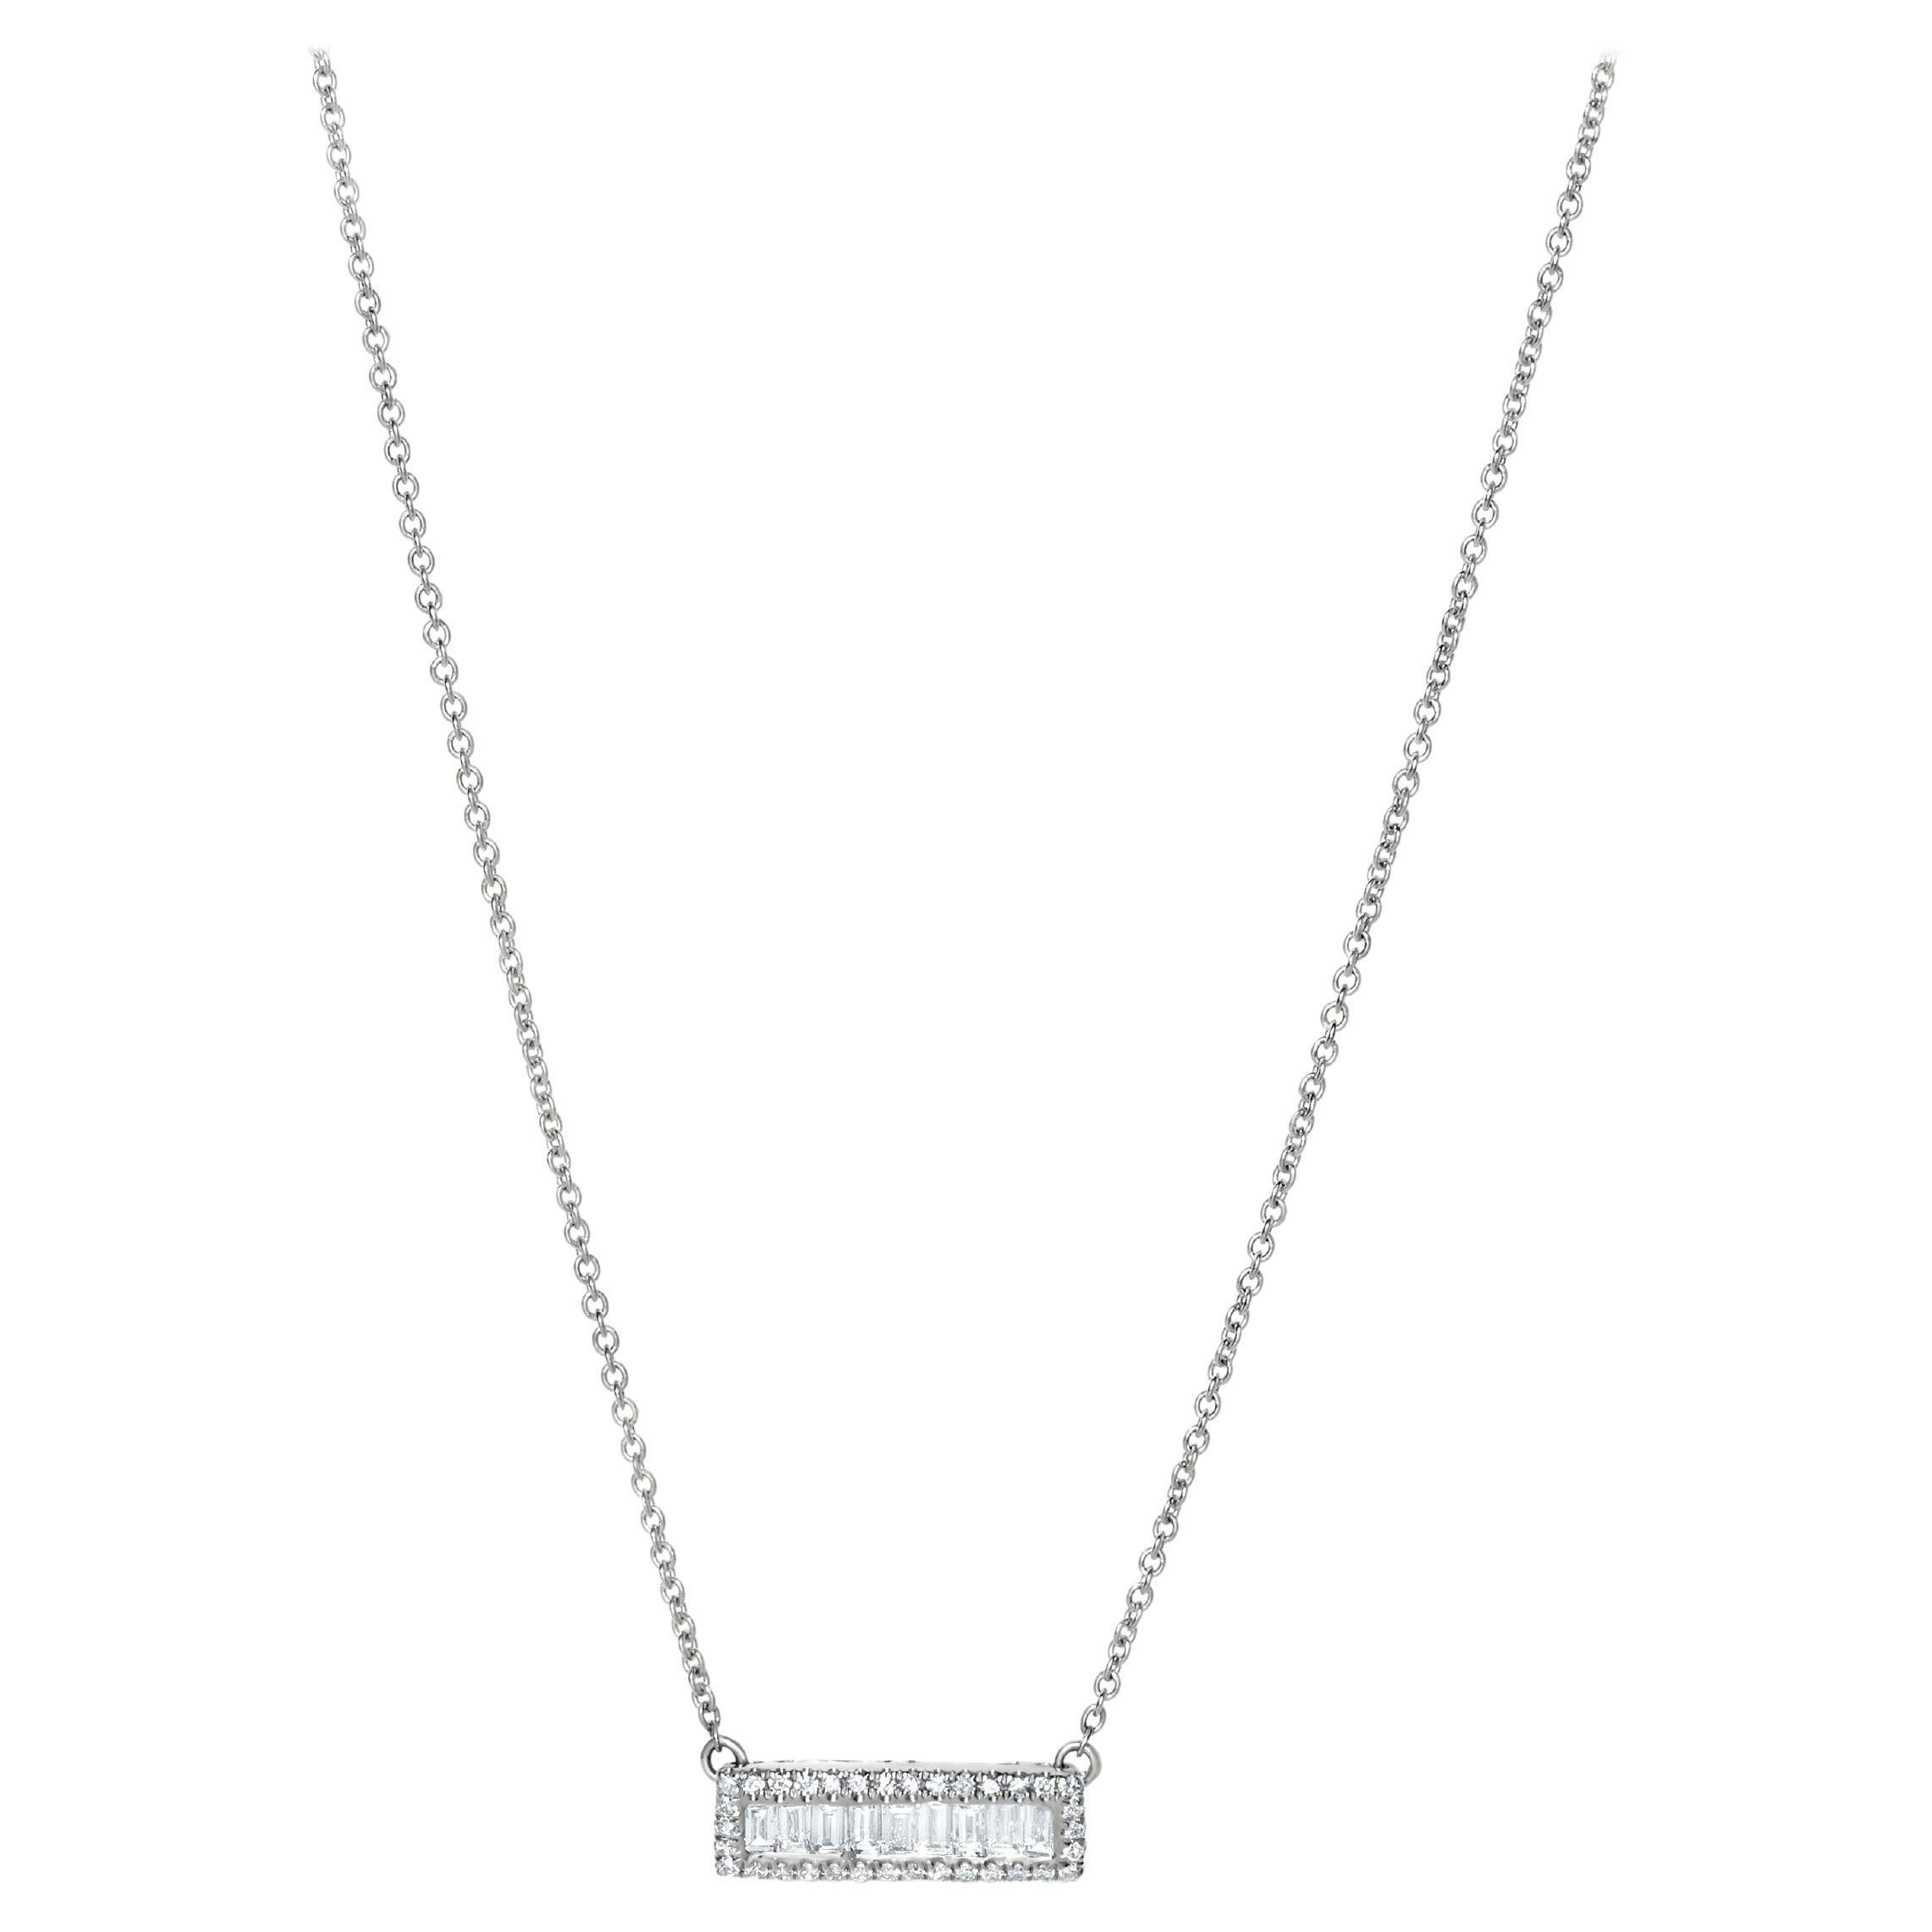 Luxle 0.36 Carat T.W Diamond Bar Pendant Necklace in 14k White Gold